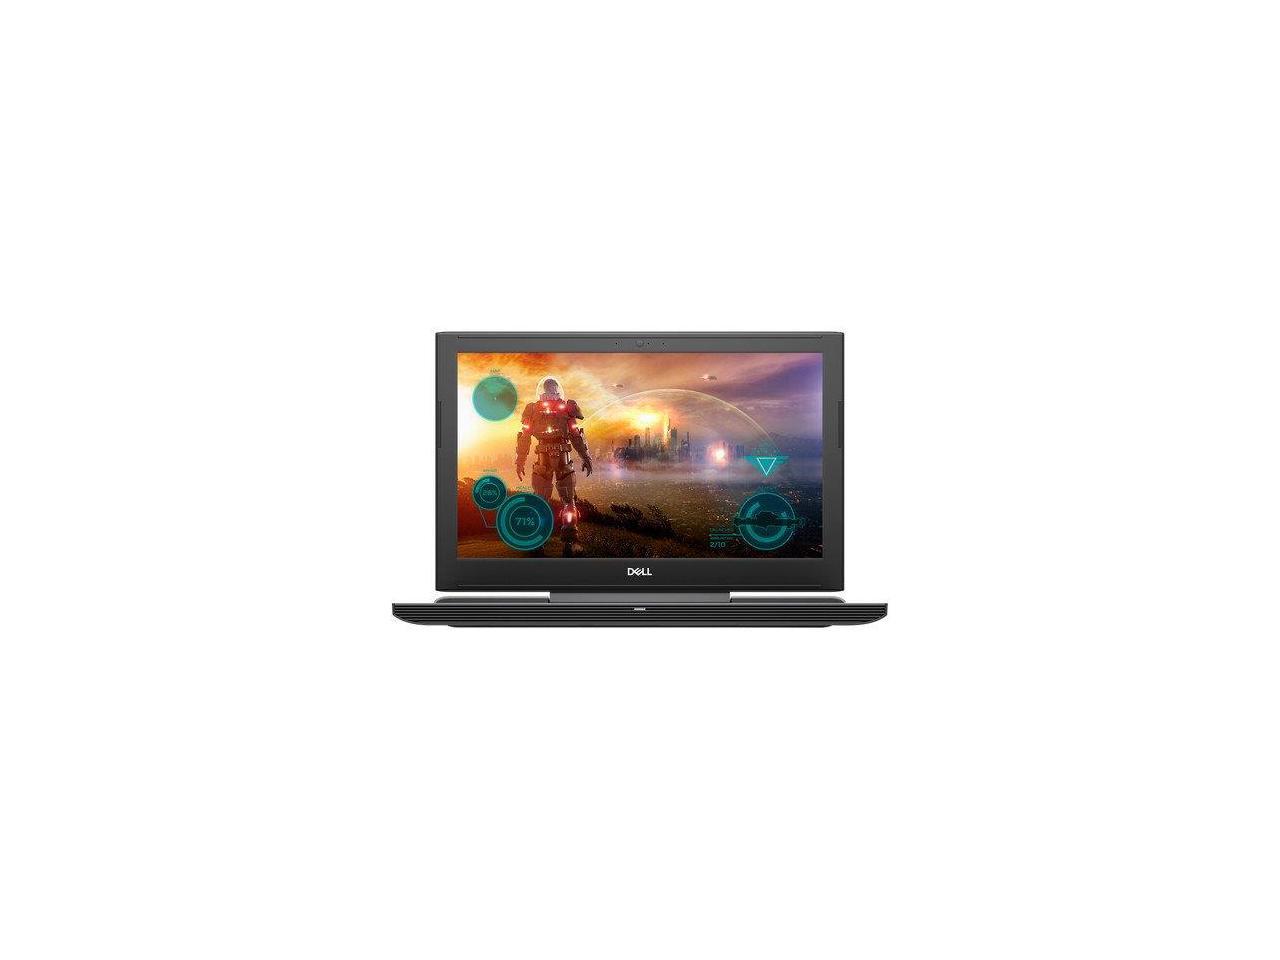 Dell Inspiron 7000 15.6" IPS FHD Gaming Laptop | VR Ready | Intel Quad Core i5-7300HQ | 16GB RAM 1024GB SSD 2TB HDD | NVIDIA GeForce GTX 1060 6GB GDDR5 | Windows 10 Black